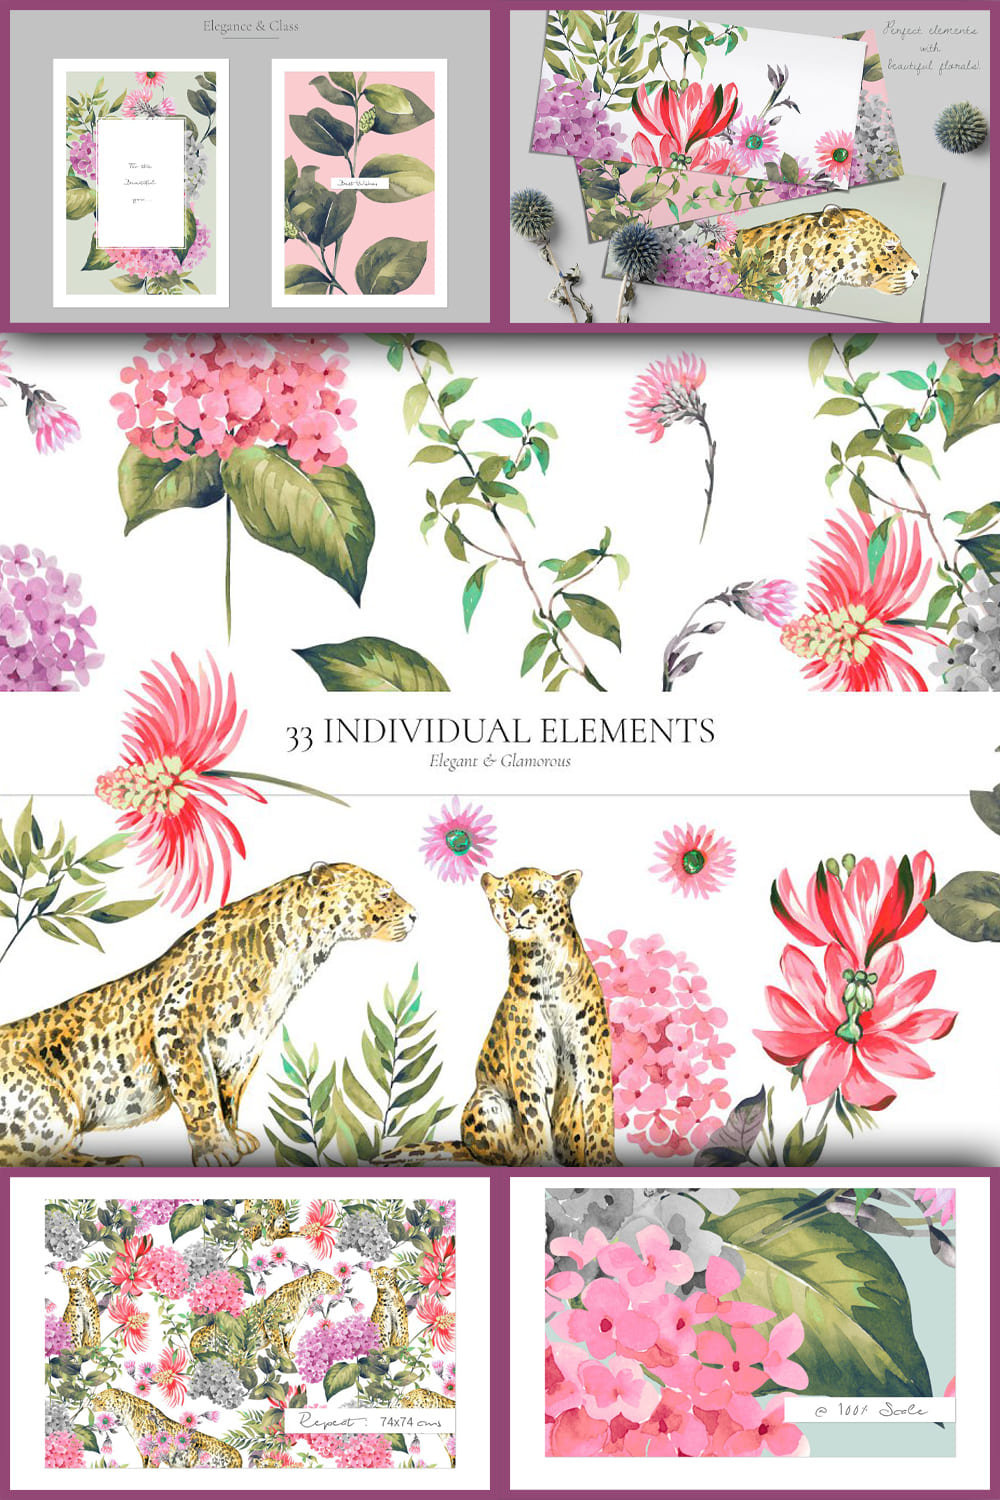 The Leopard Print, Patterns & Motifs - Pinterest.